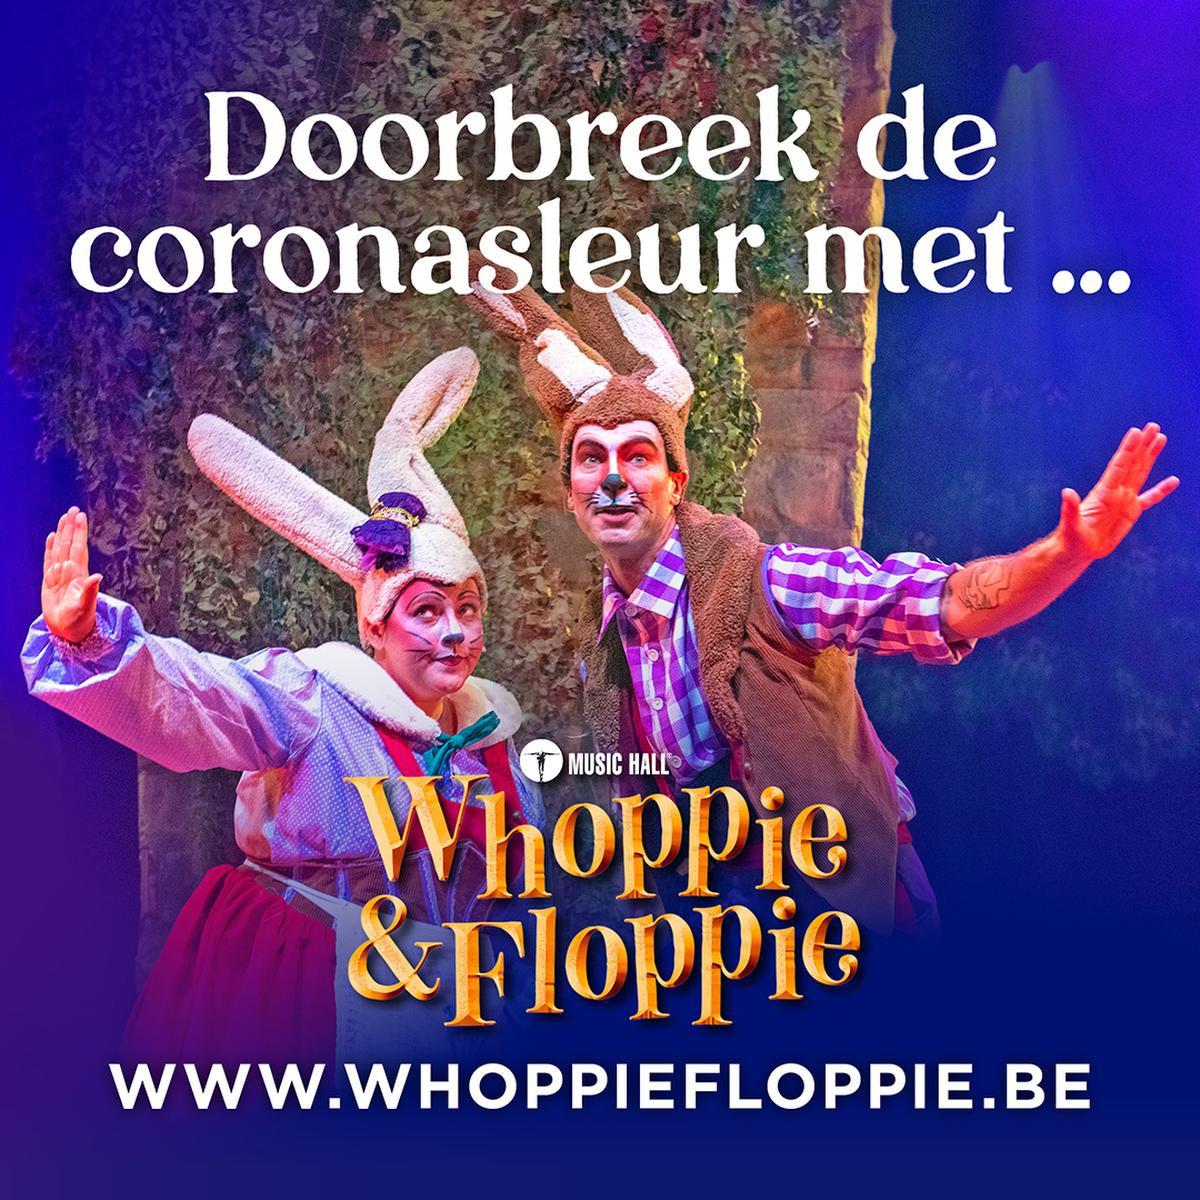 West-Vlaamse sprookjesboskonijnen Whoppie en Floppie lanceren eigen kleurplaten én website